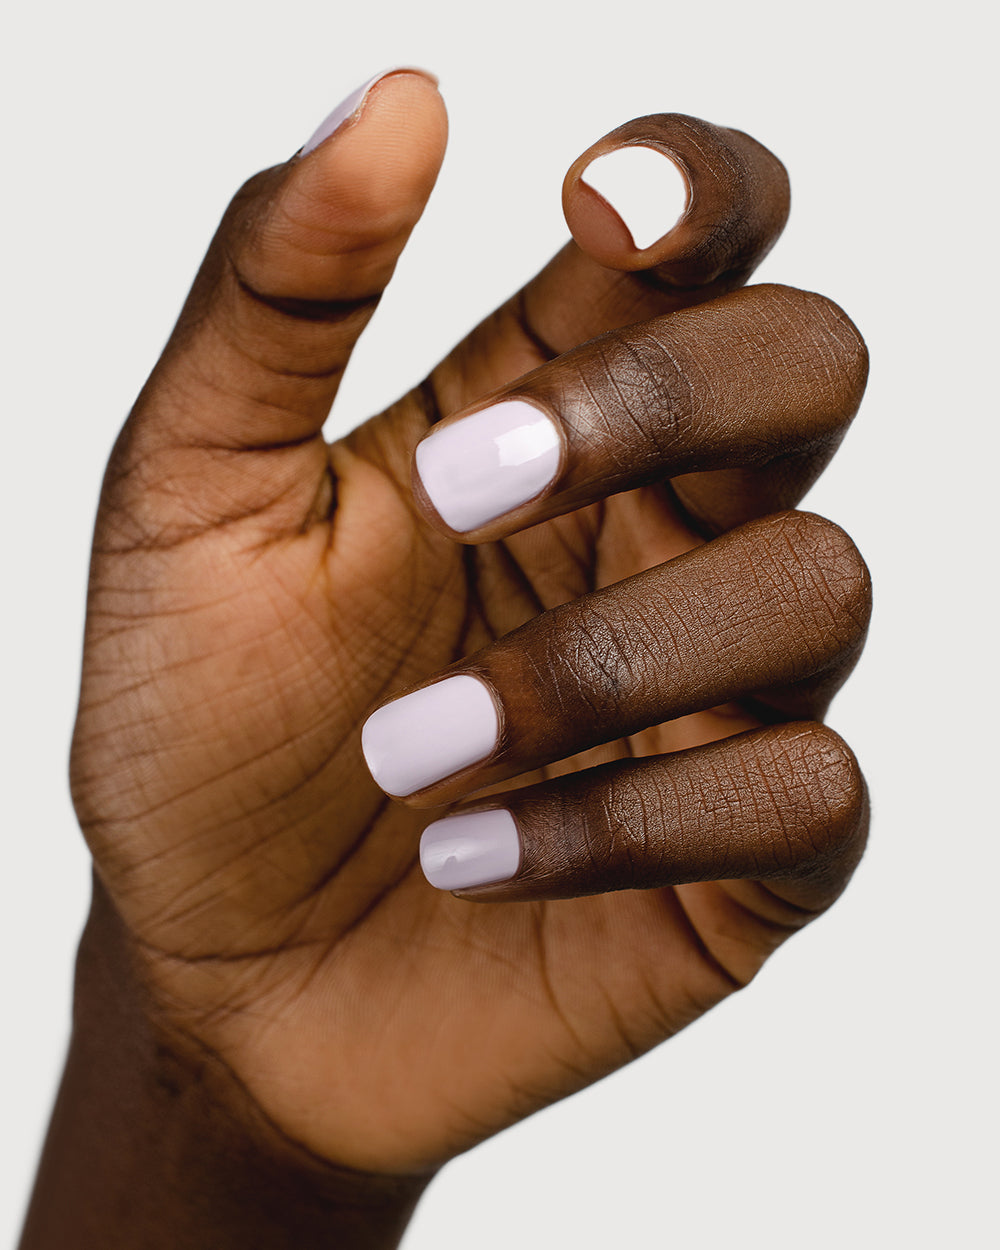 Light lilac pastel nail polish hand swatch on dark skin tone